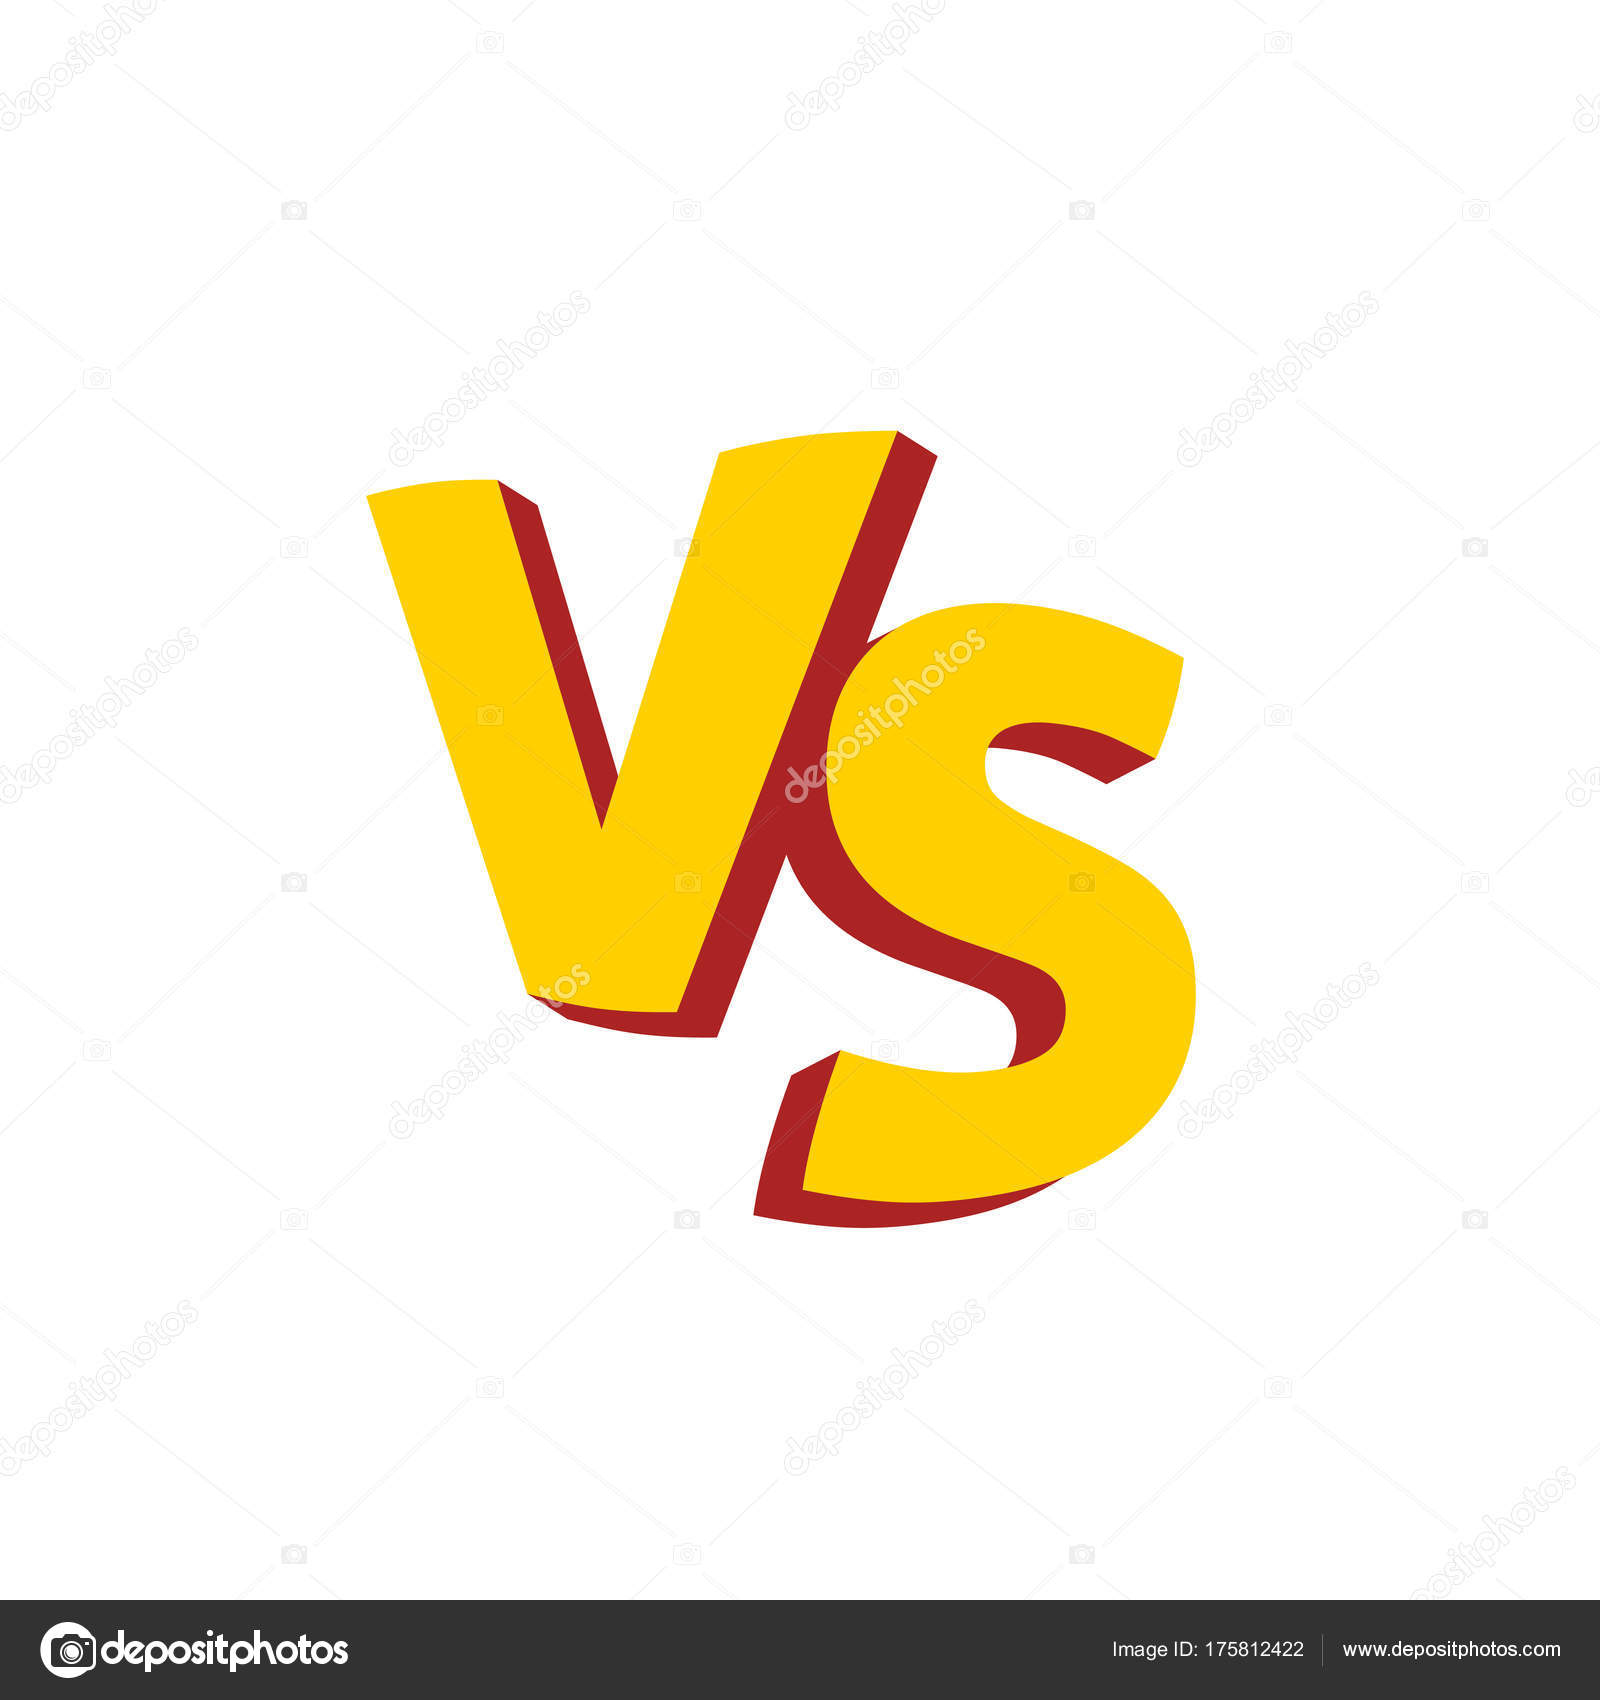 Versus letters or vs logo vector emblem - Novetv.com